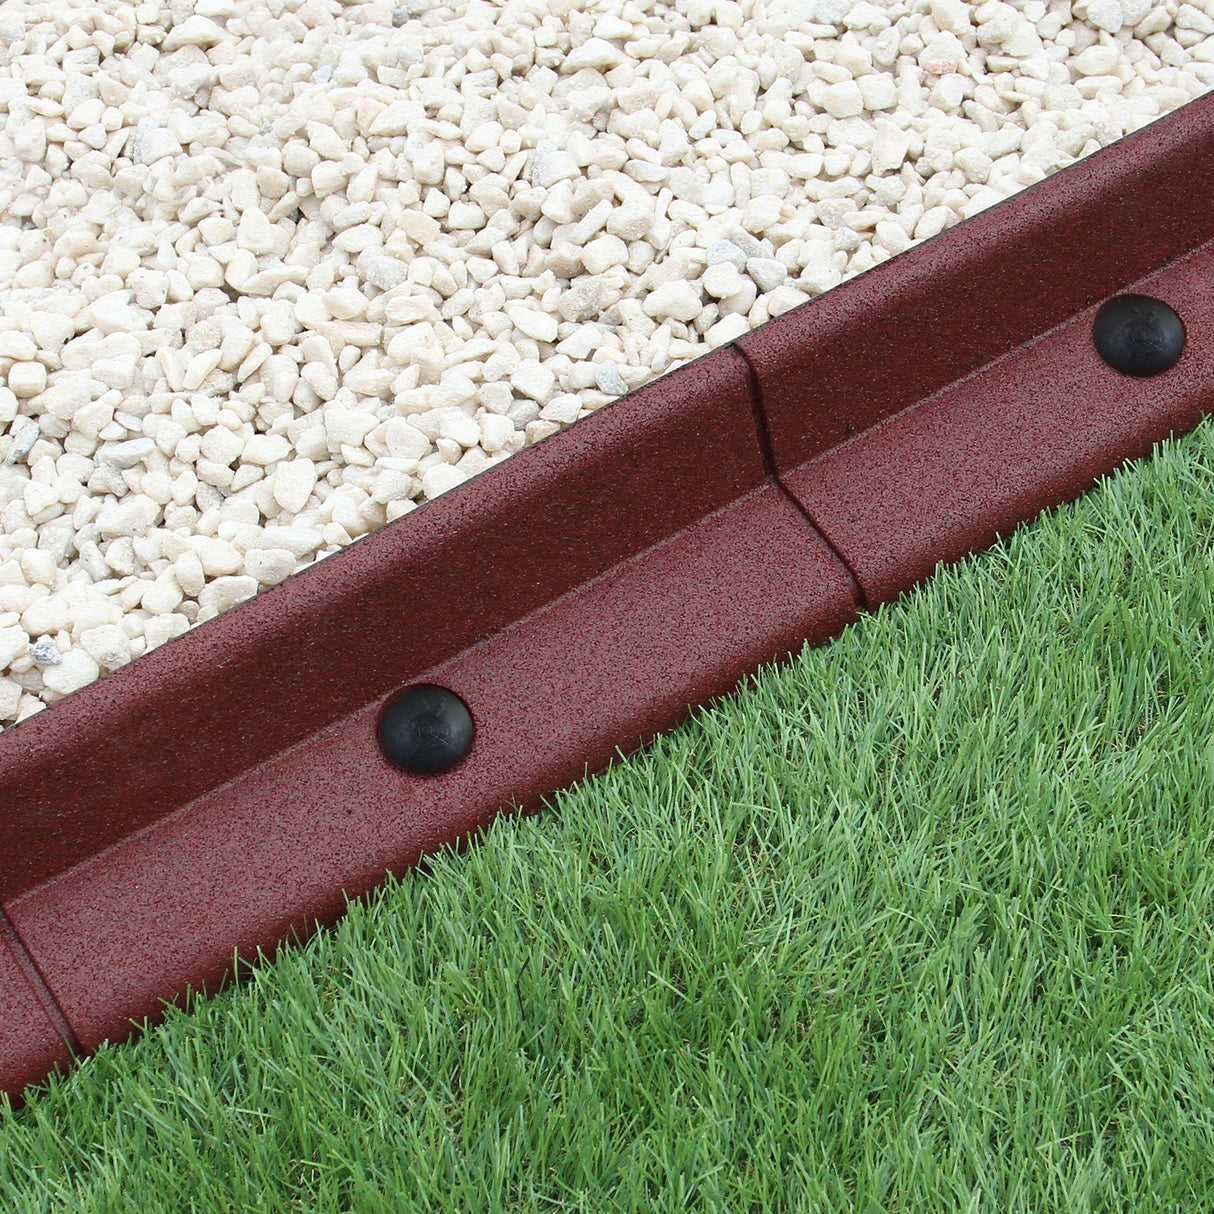 Flexible Lawn Edging Terracotta 1.2m x 16